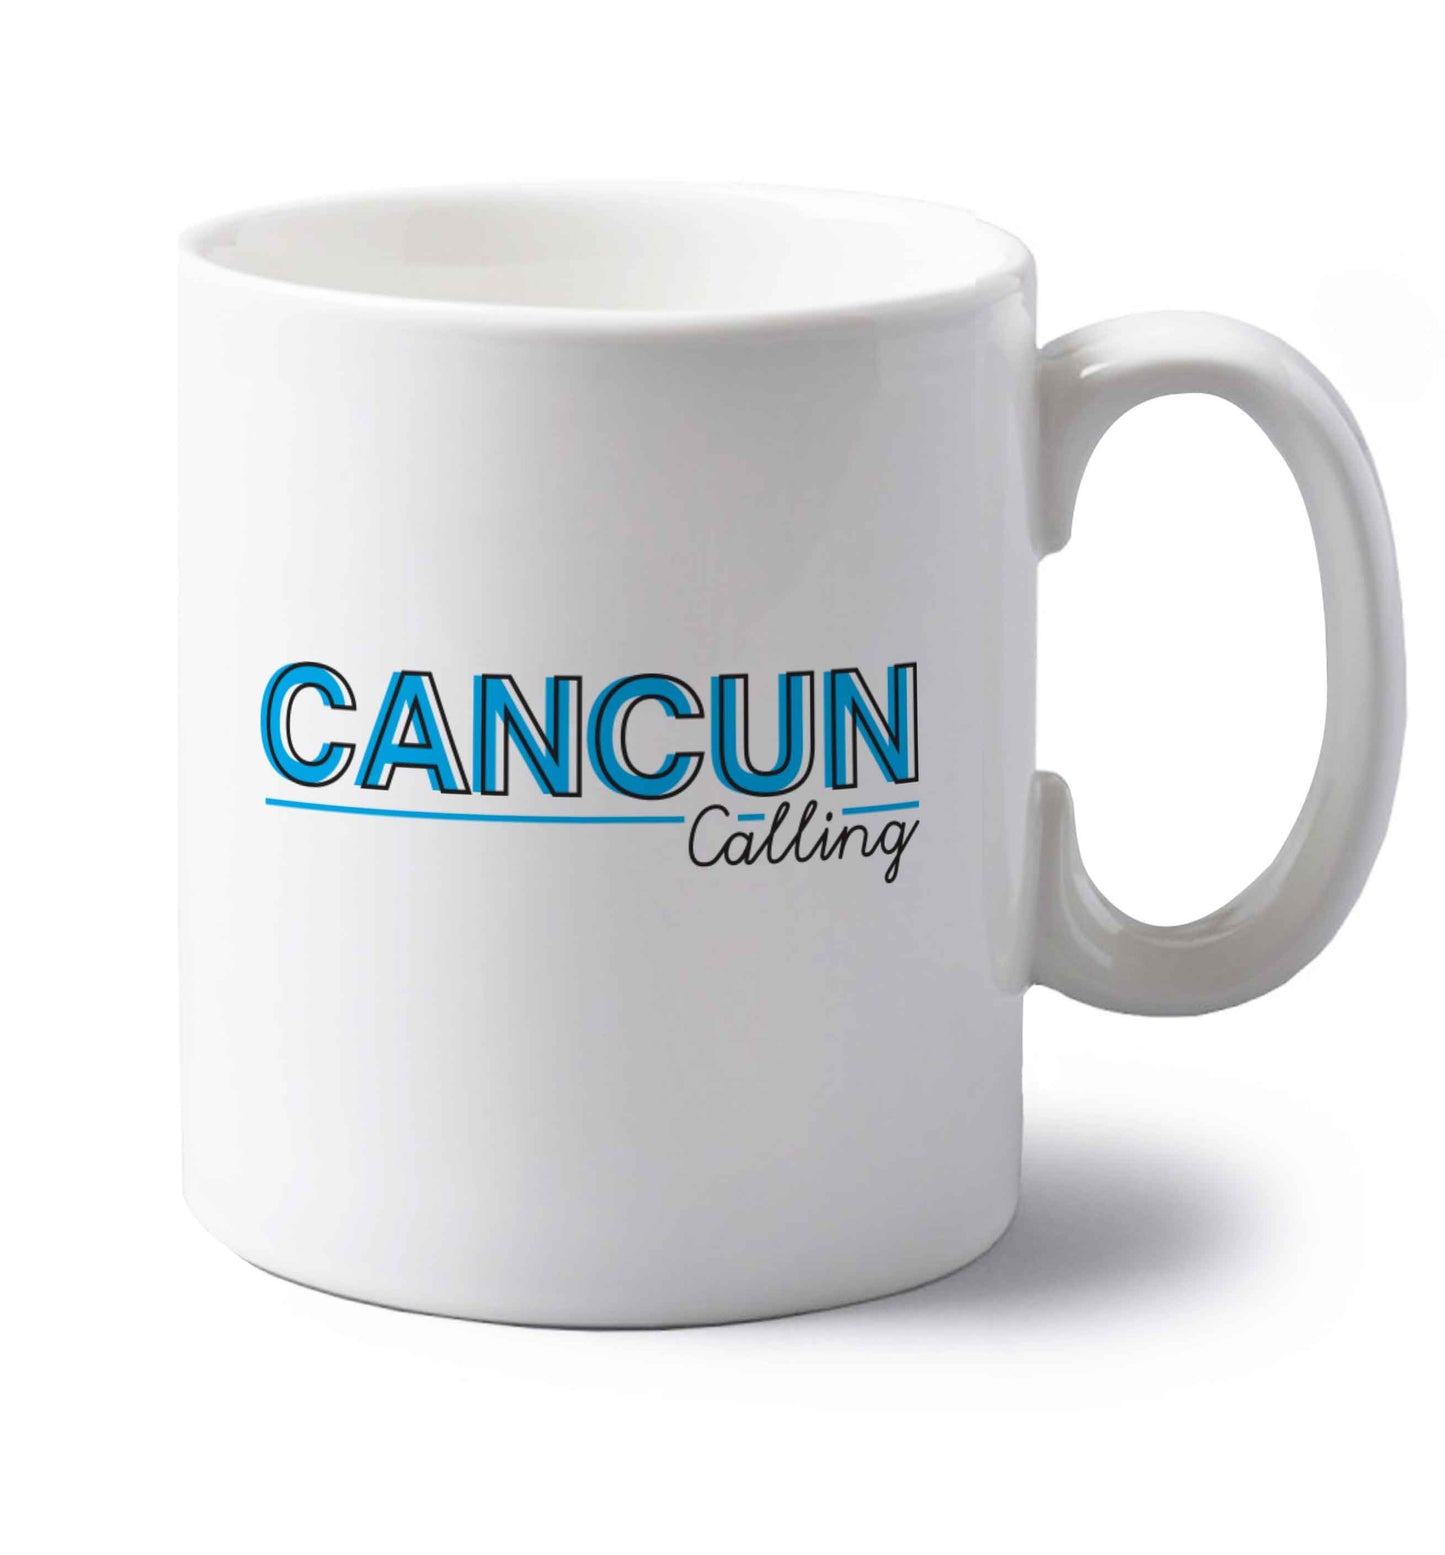 Cancun calling left handed white ceramic mug 